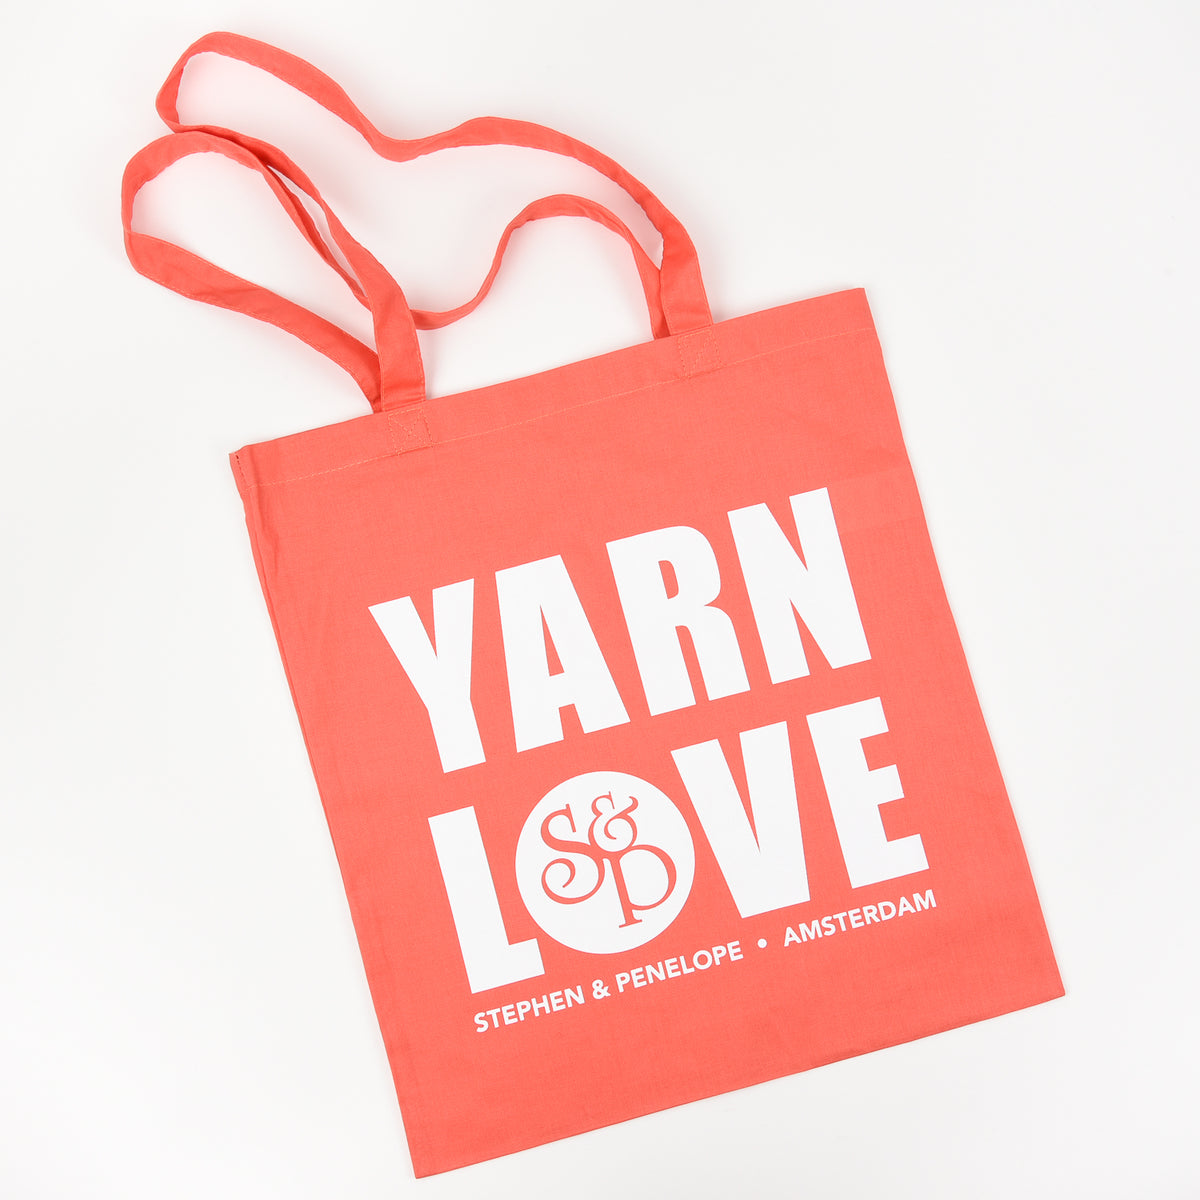 Yarn Love